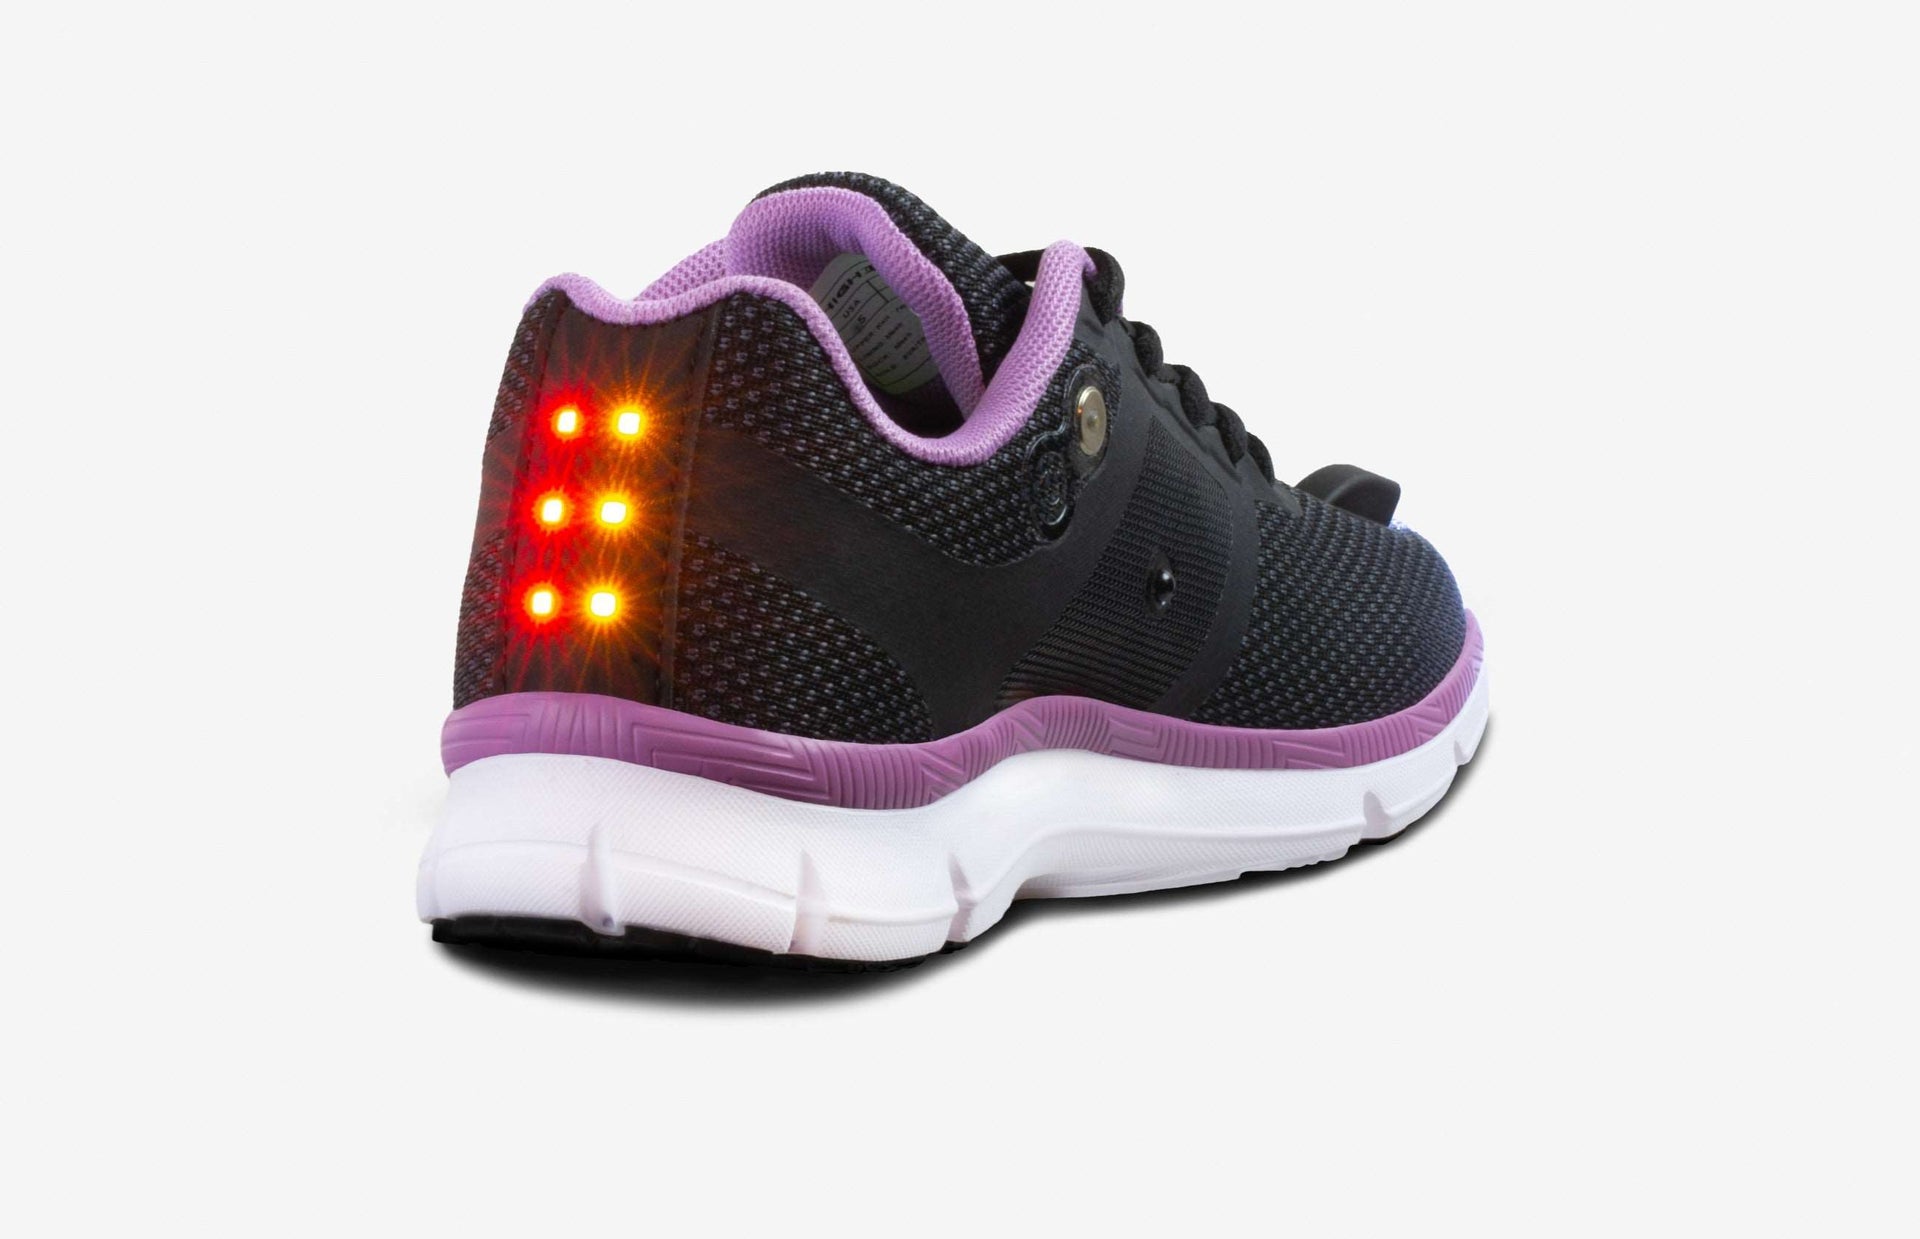 Nfin8 Luminous Stride - Women's Runner Shoes with Built-in Lights